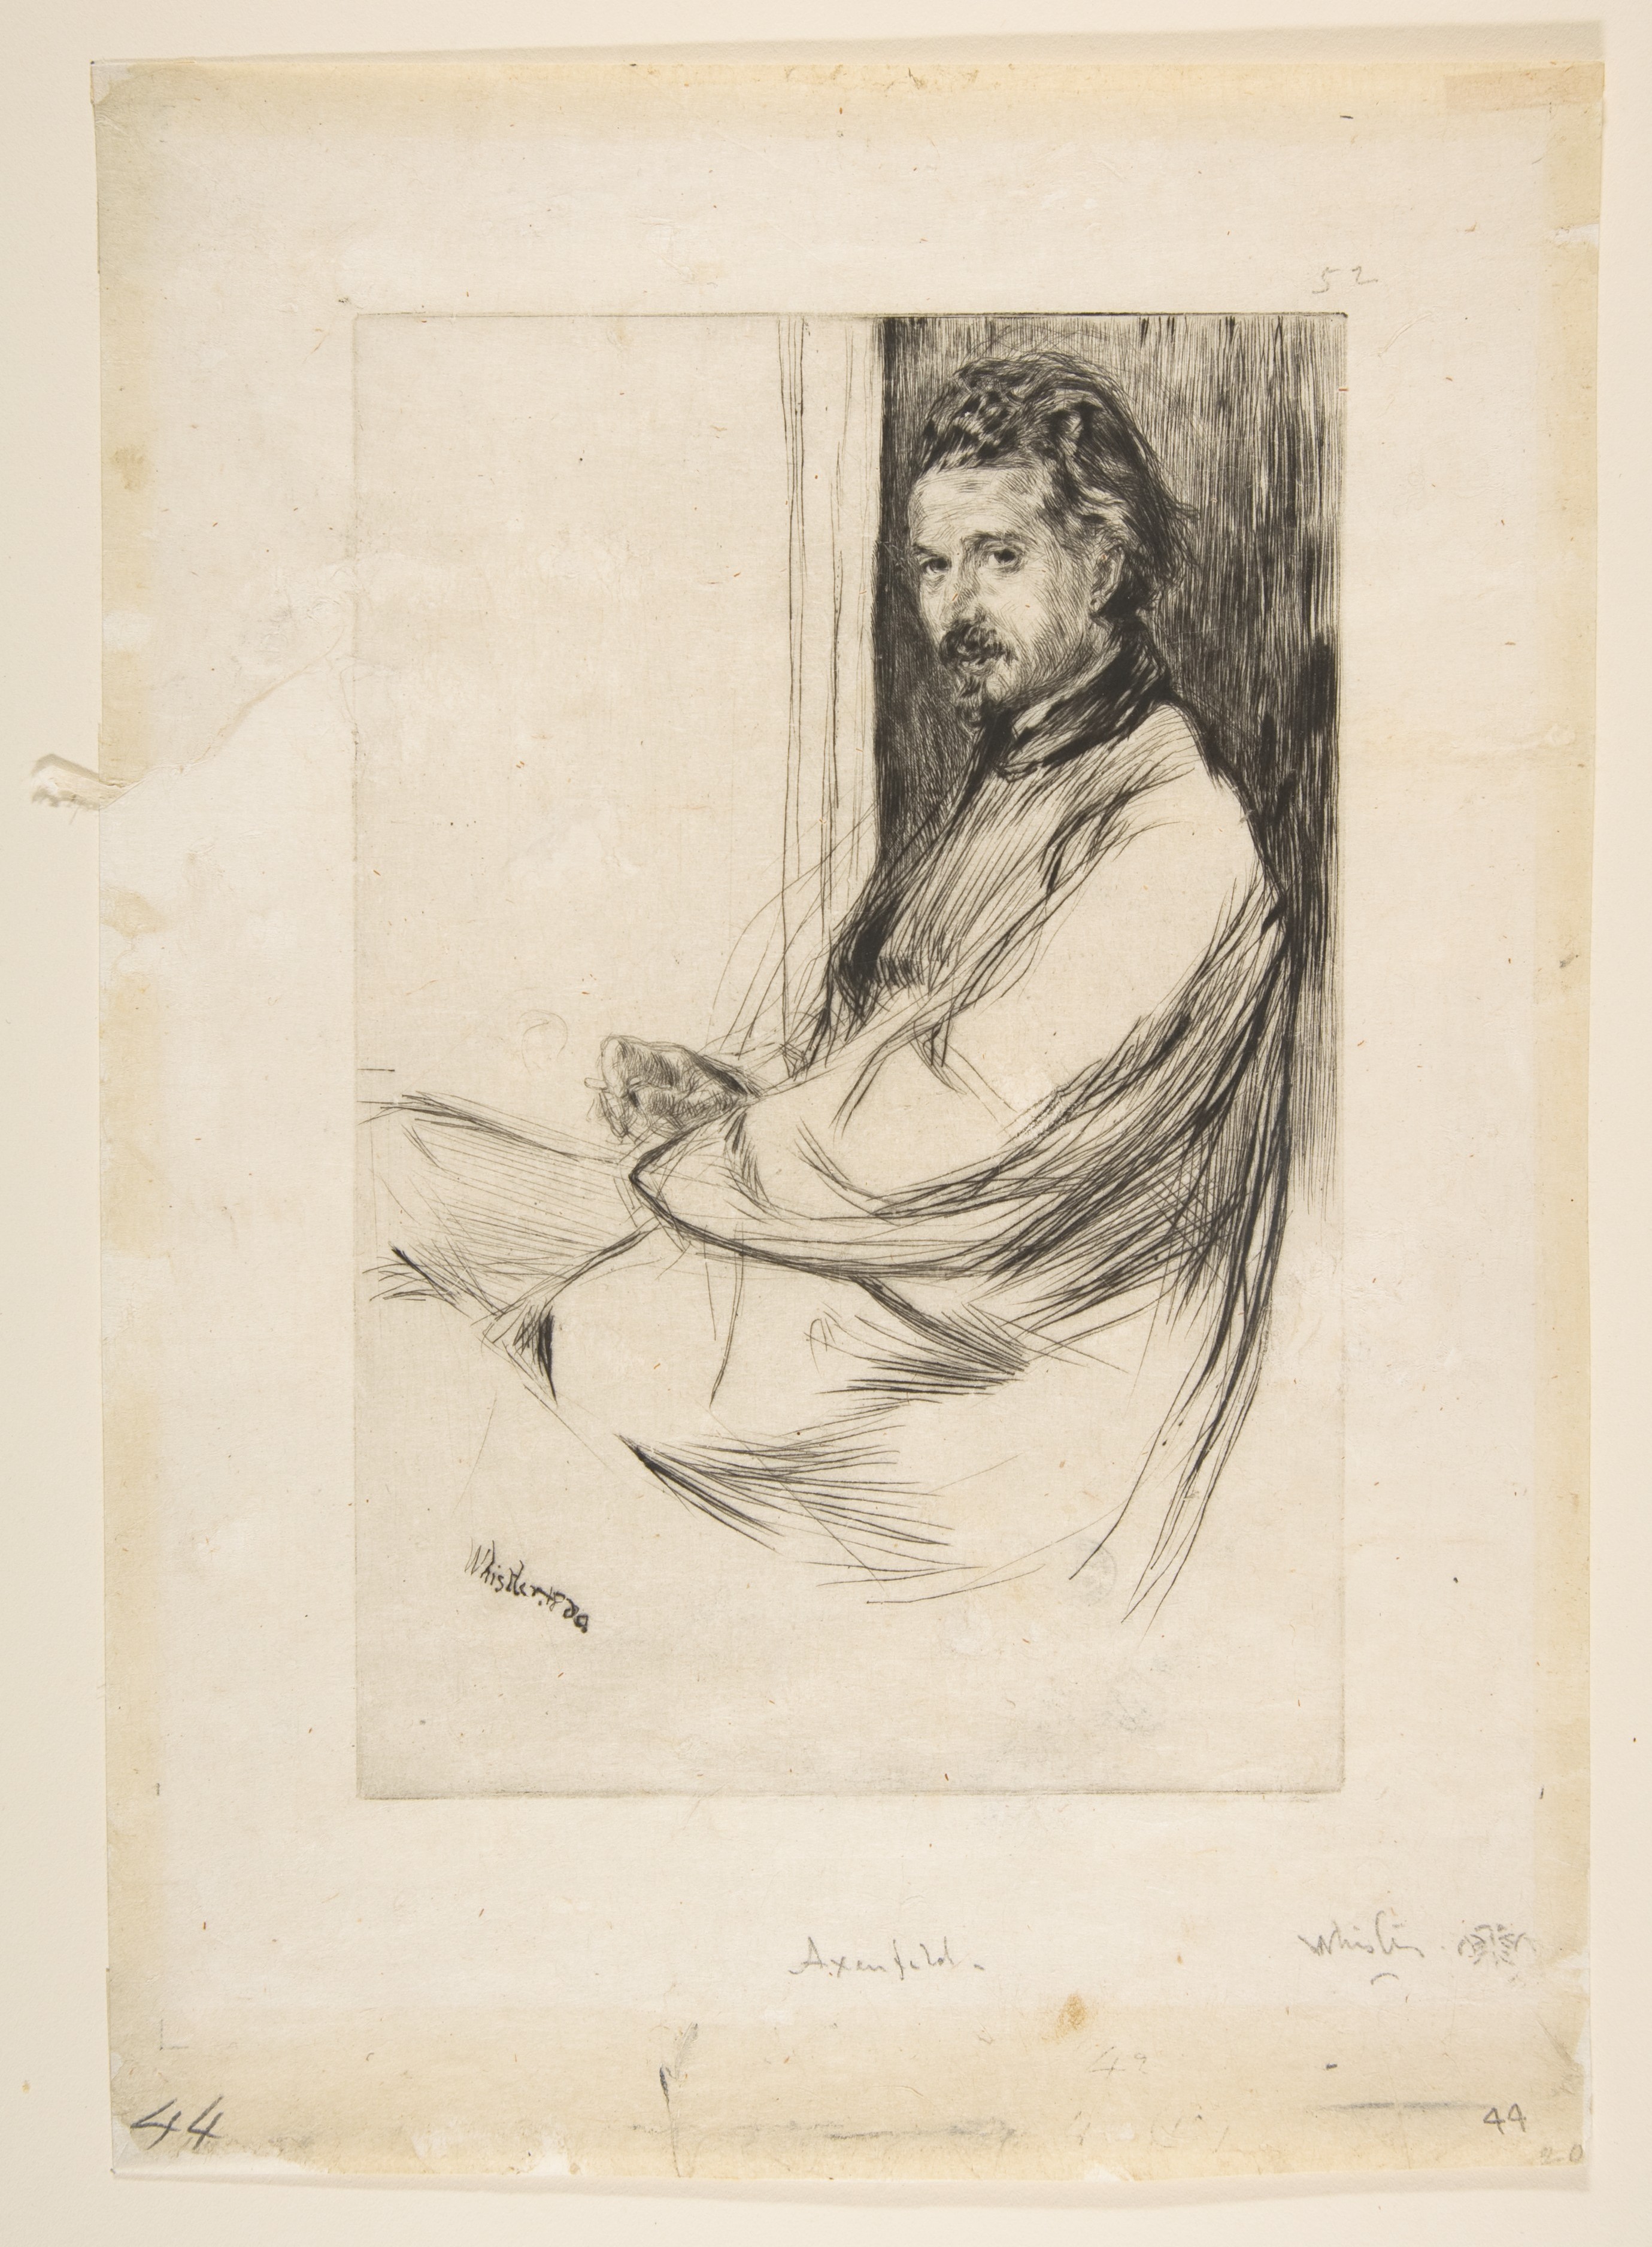 James McNeill Whistler | Axenfeld | The Metropolitan Museum of Art